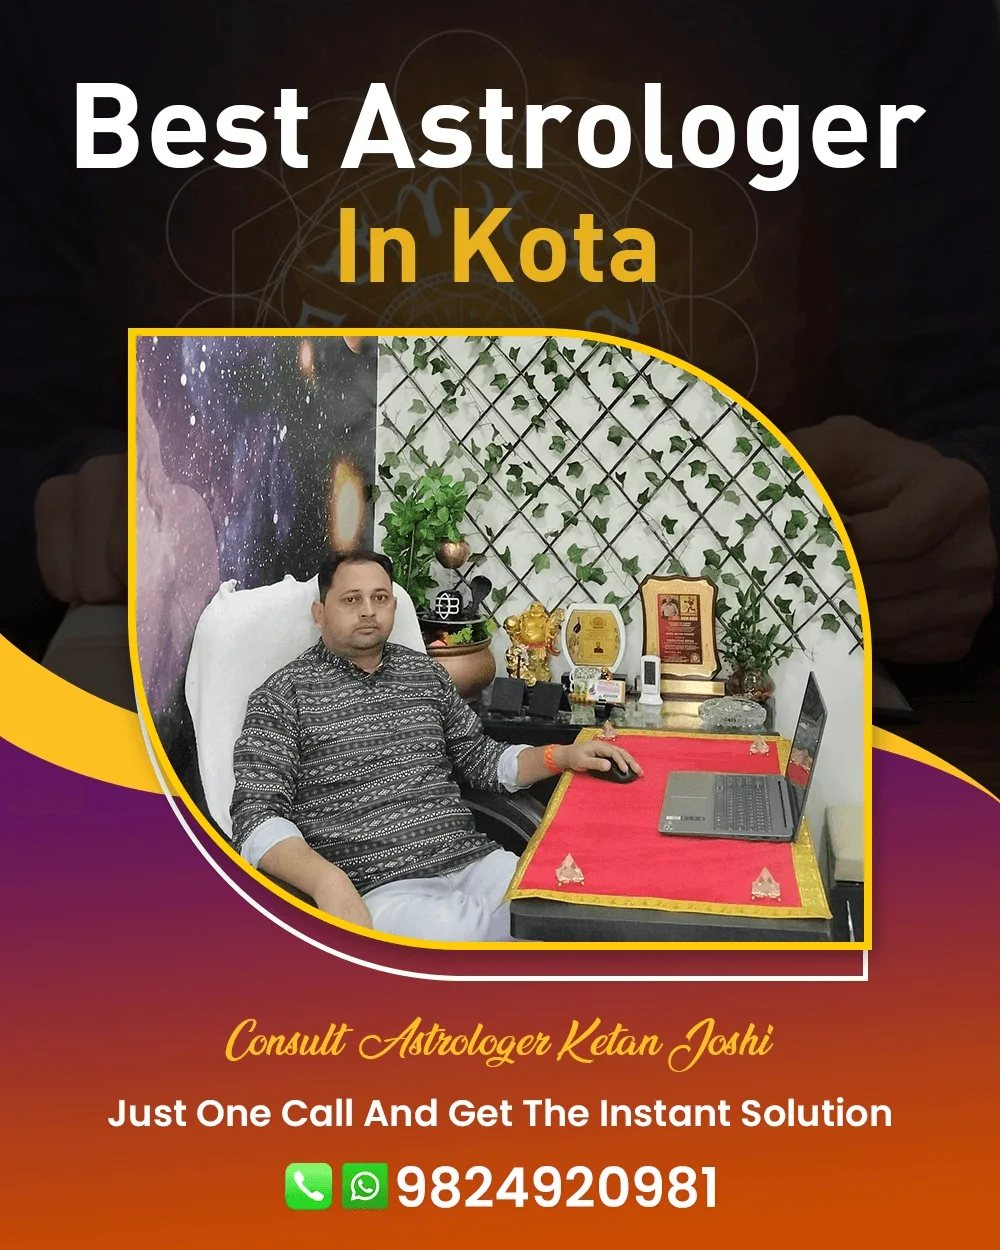 Best Astrologer In Kota